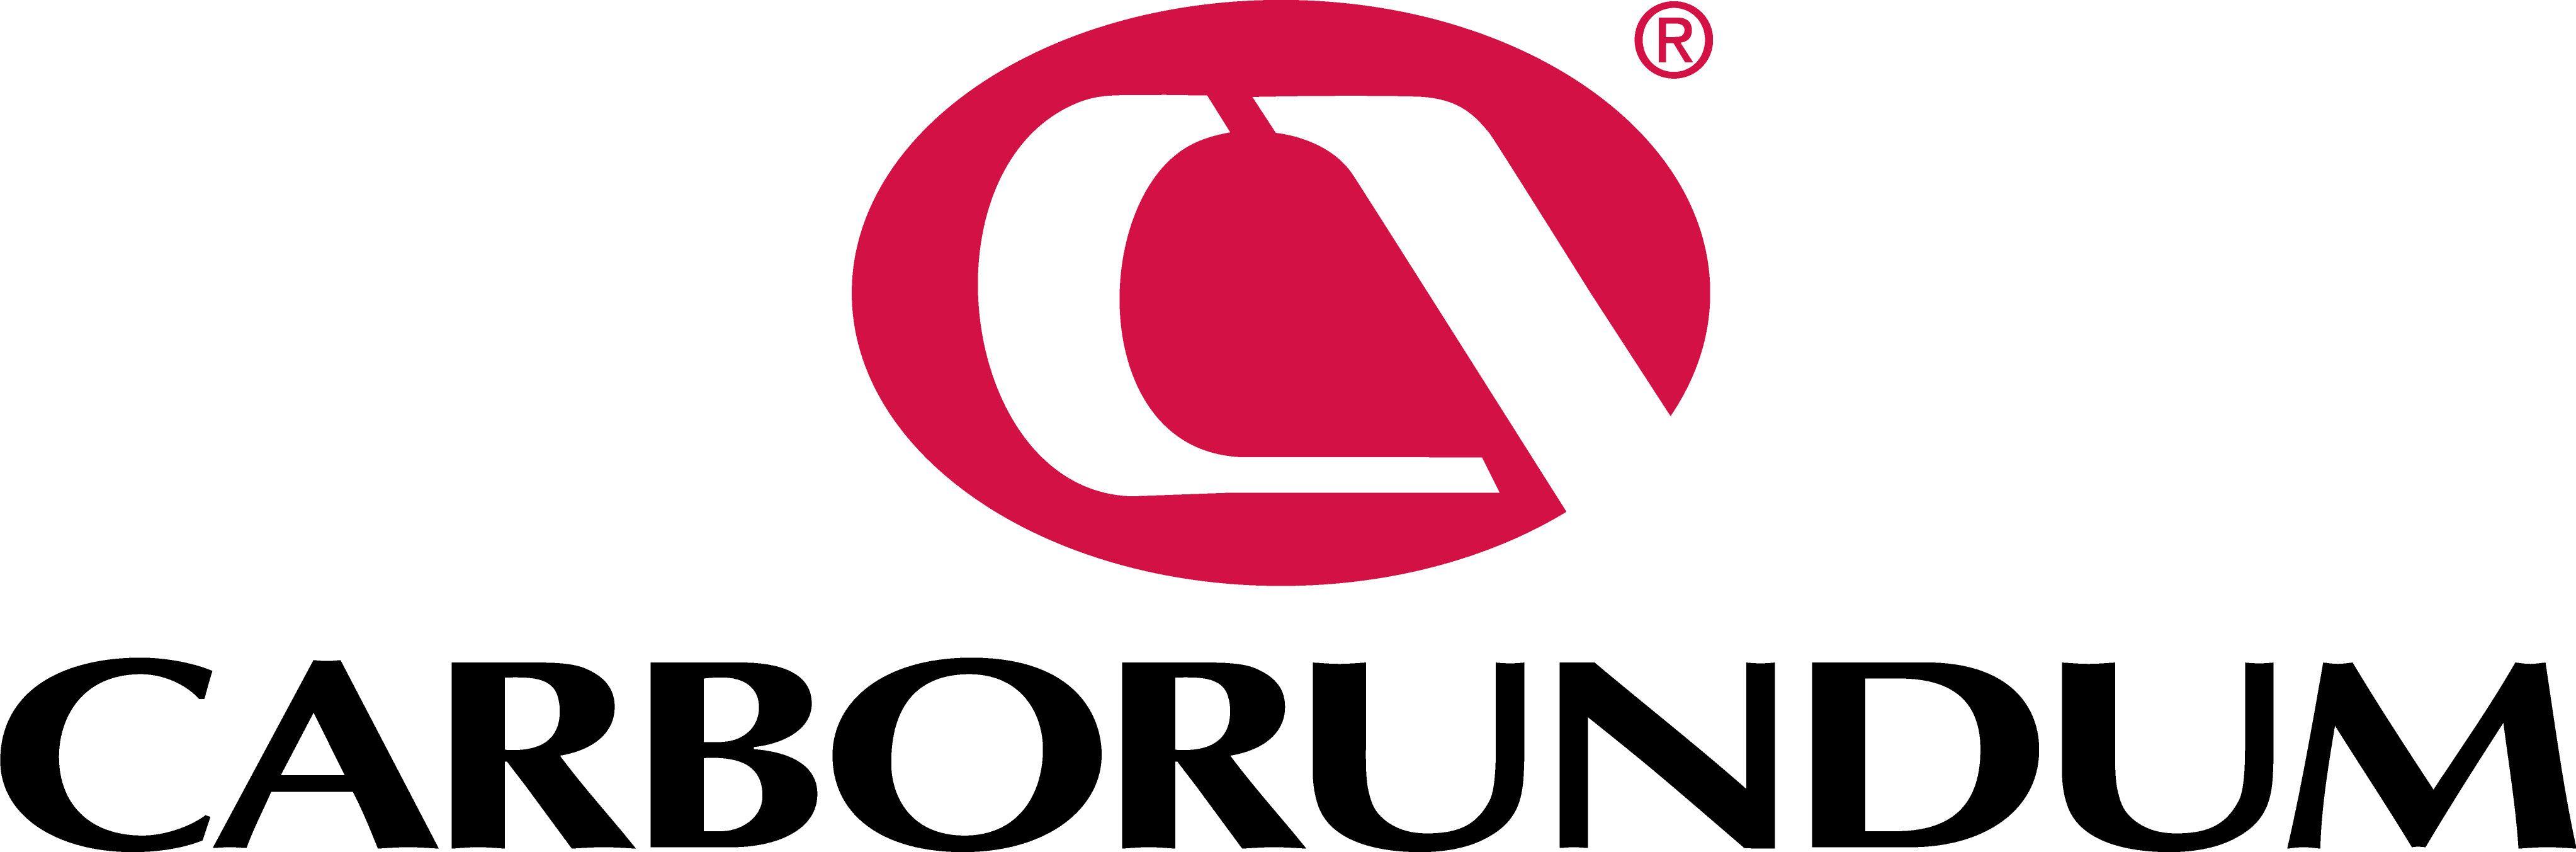 Abrasive Logo - Carborundum Abrasives North America Home Page